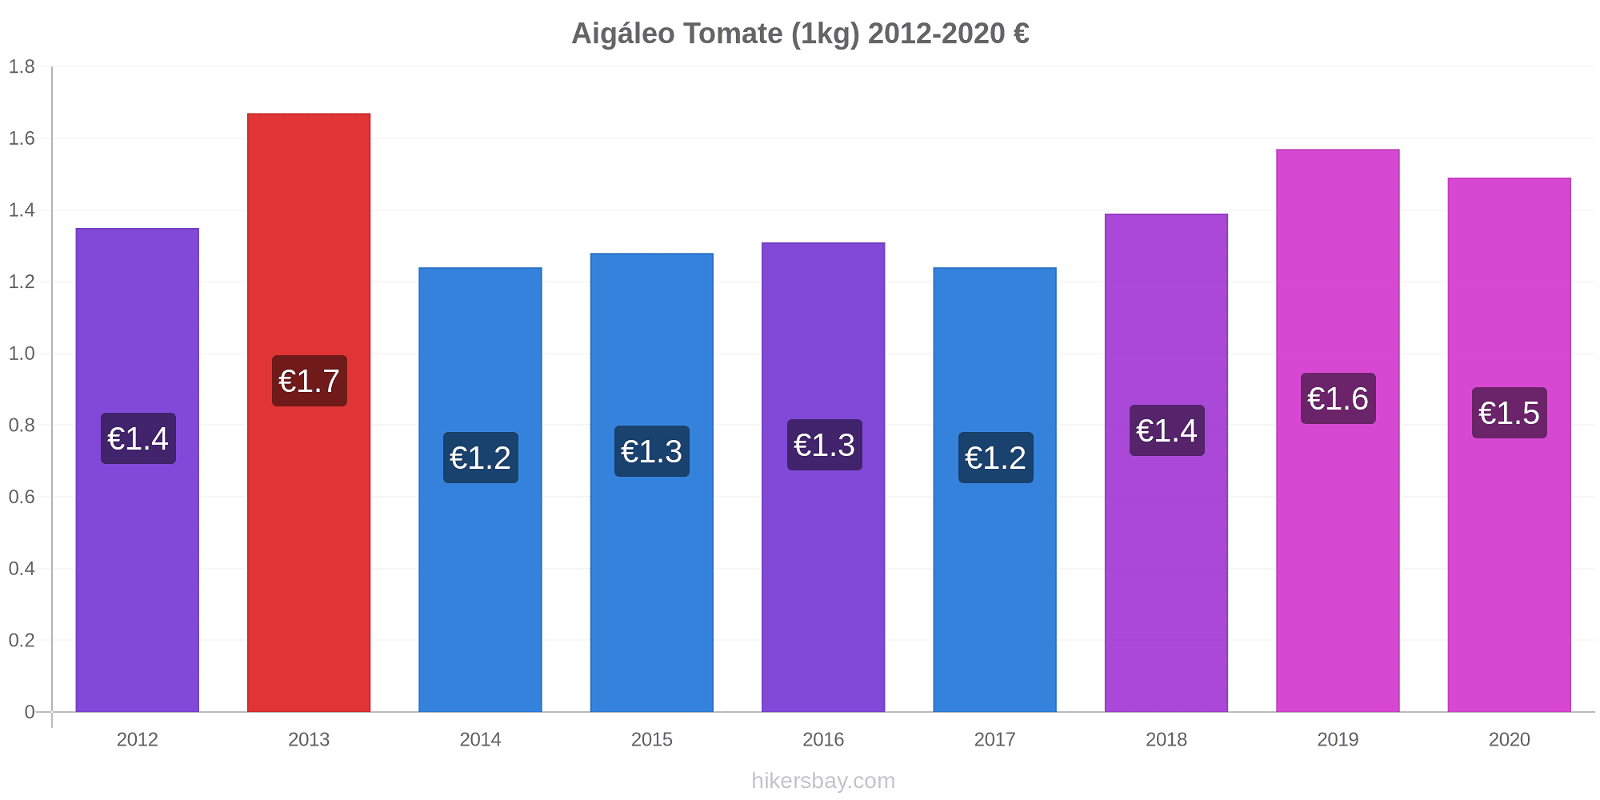 Aigáleo changements de prix Tomate (1kg) hikersbay.com